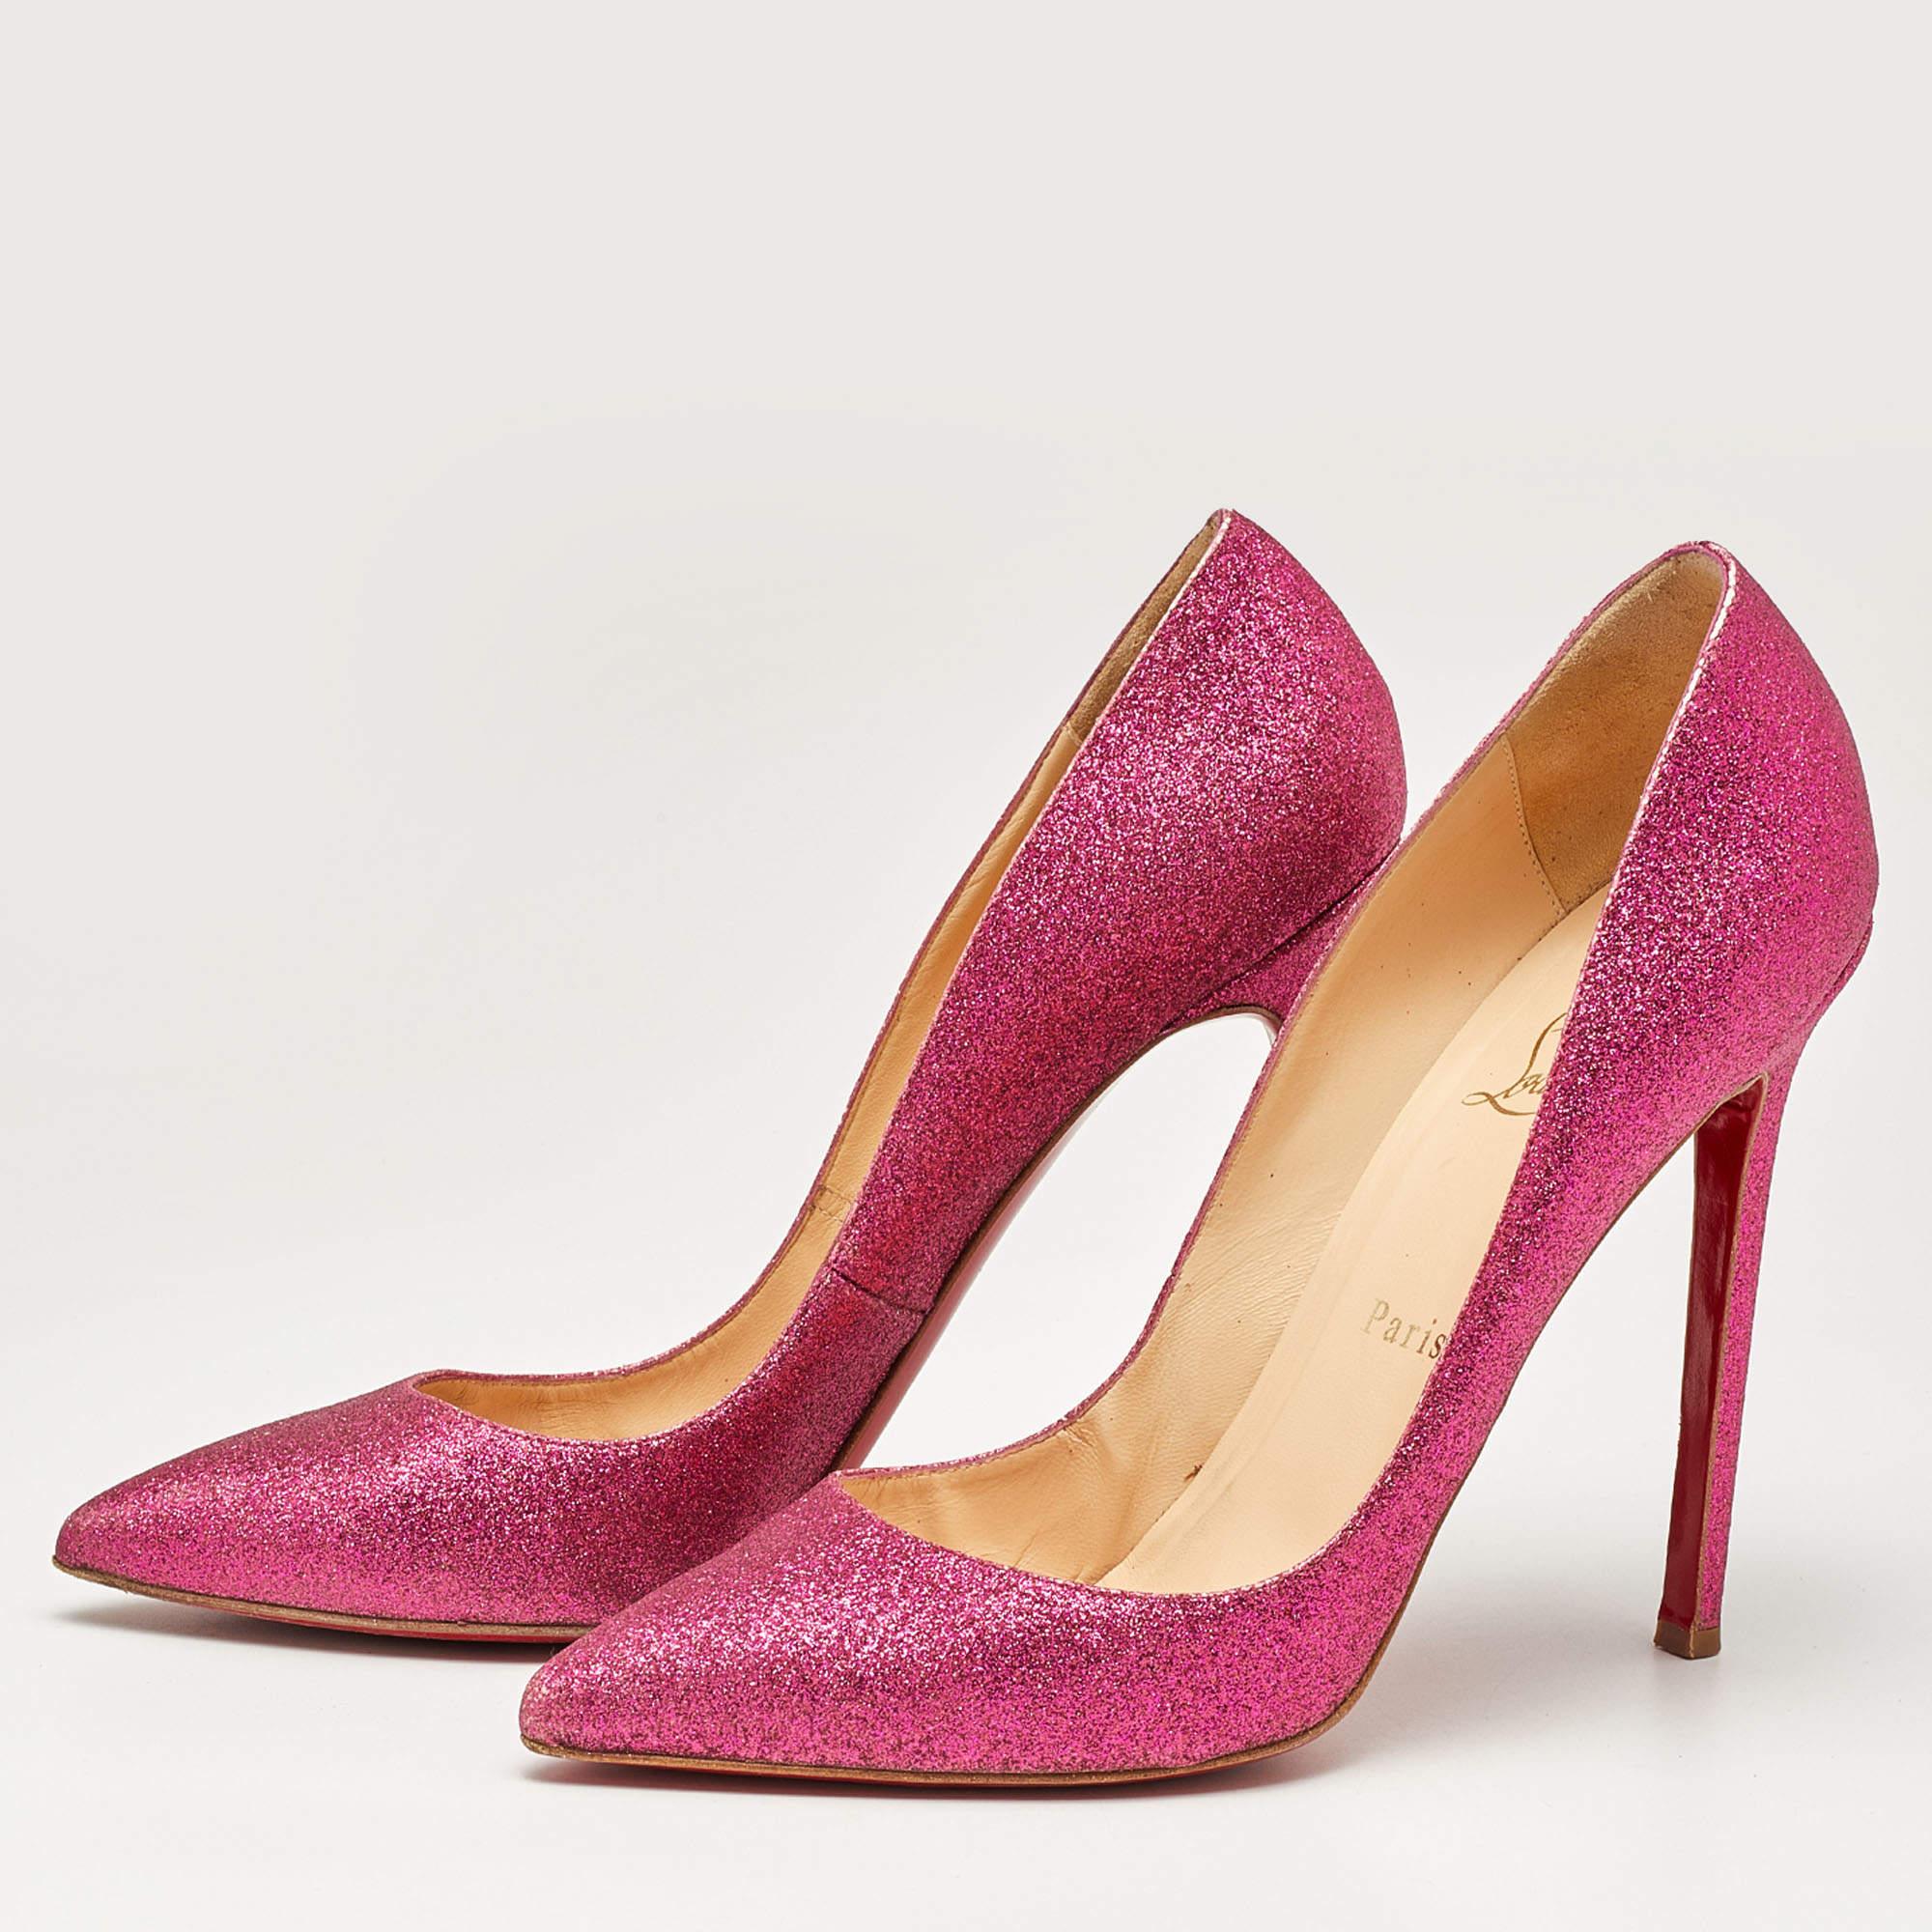 Women's Christian Louboutin Pink Glitter Pigalle Pumps Size 39.5